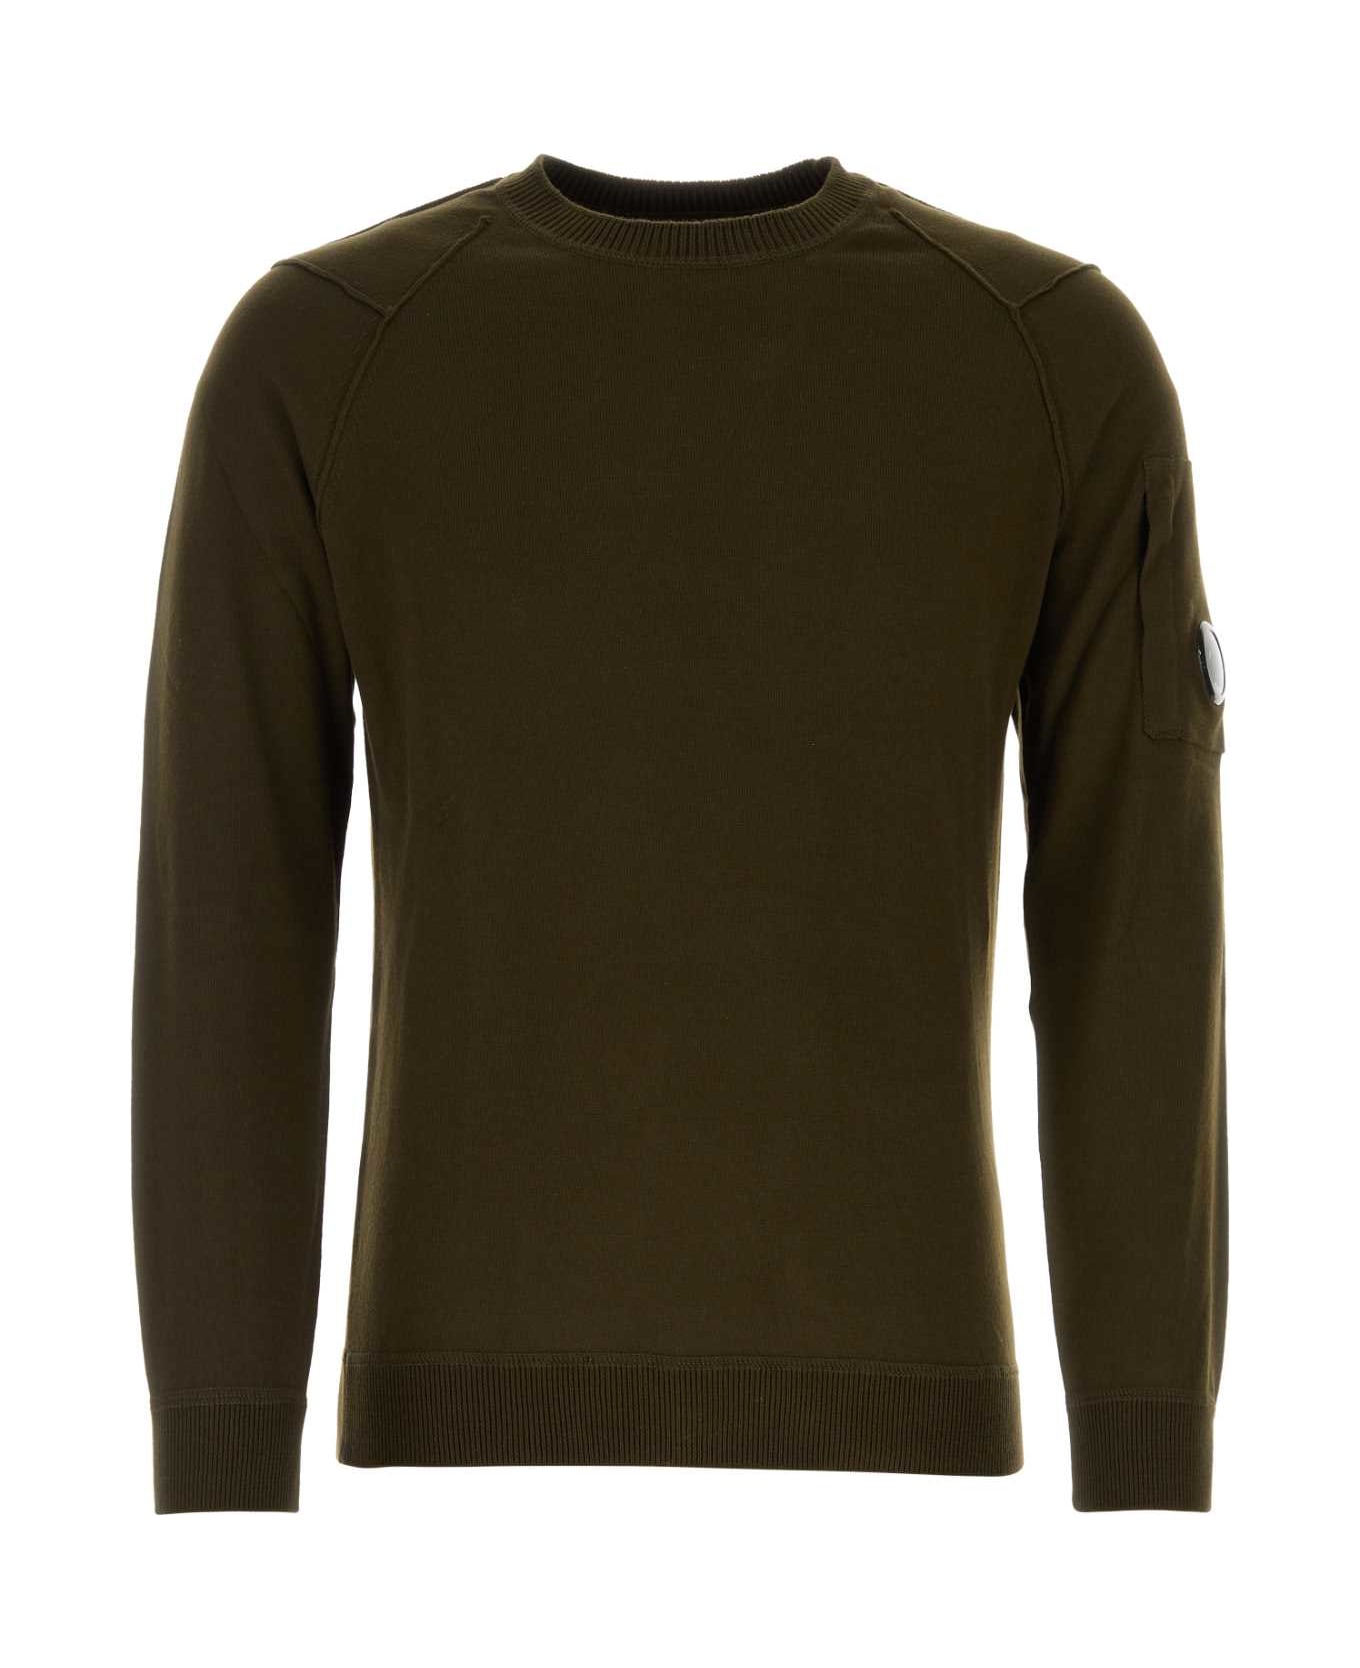 C.P. Company Dark Green Cotton Sweater - IVYGREEN